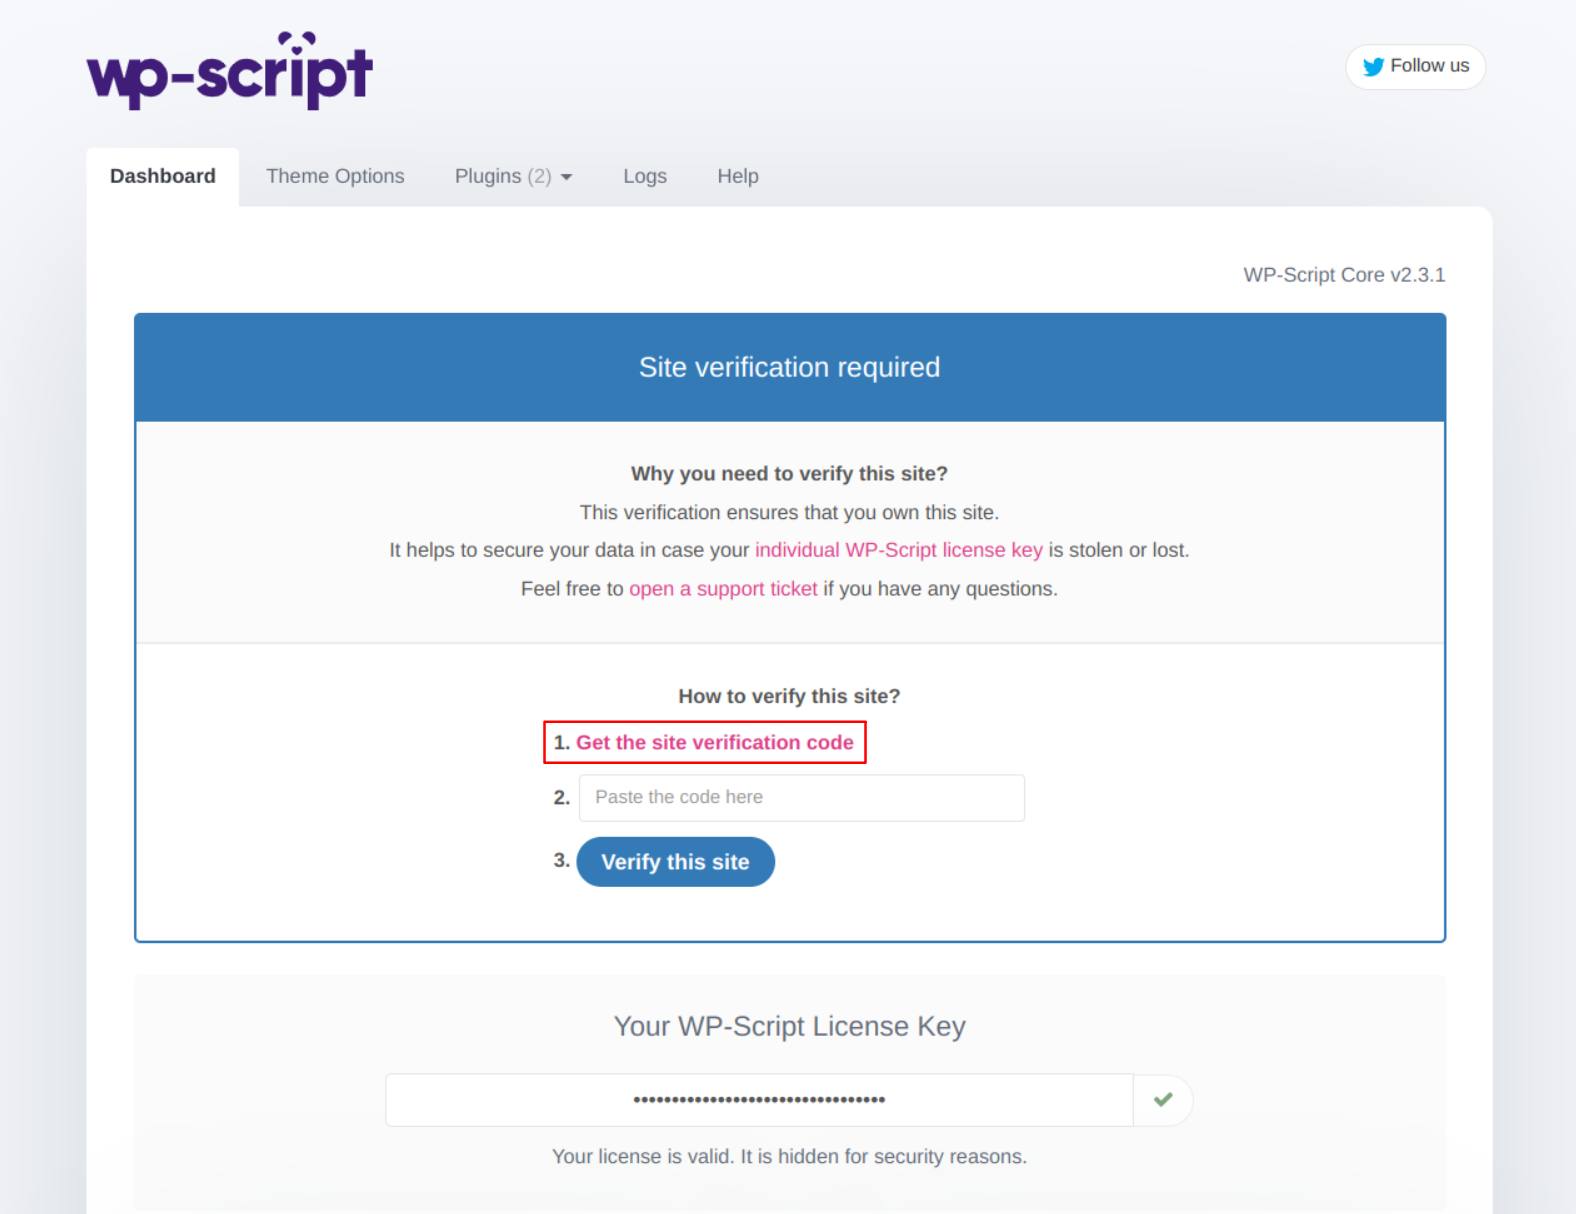 The new WP-Script Core Dahsboard to verify your site